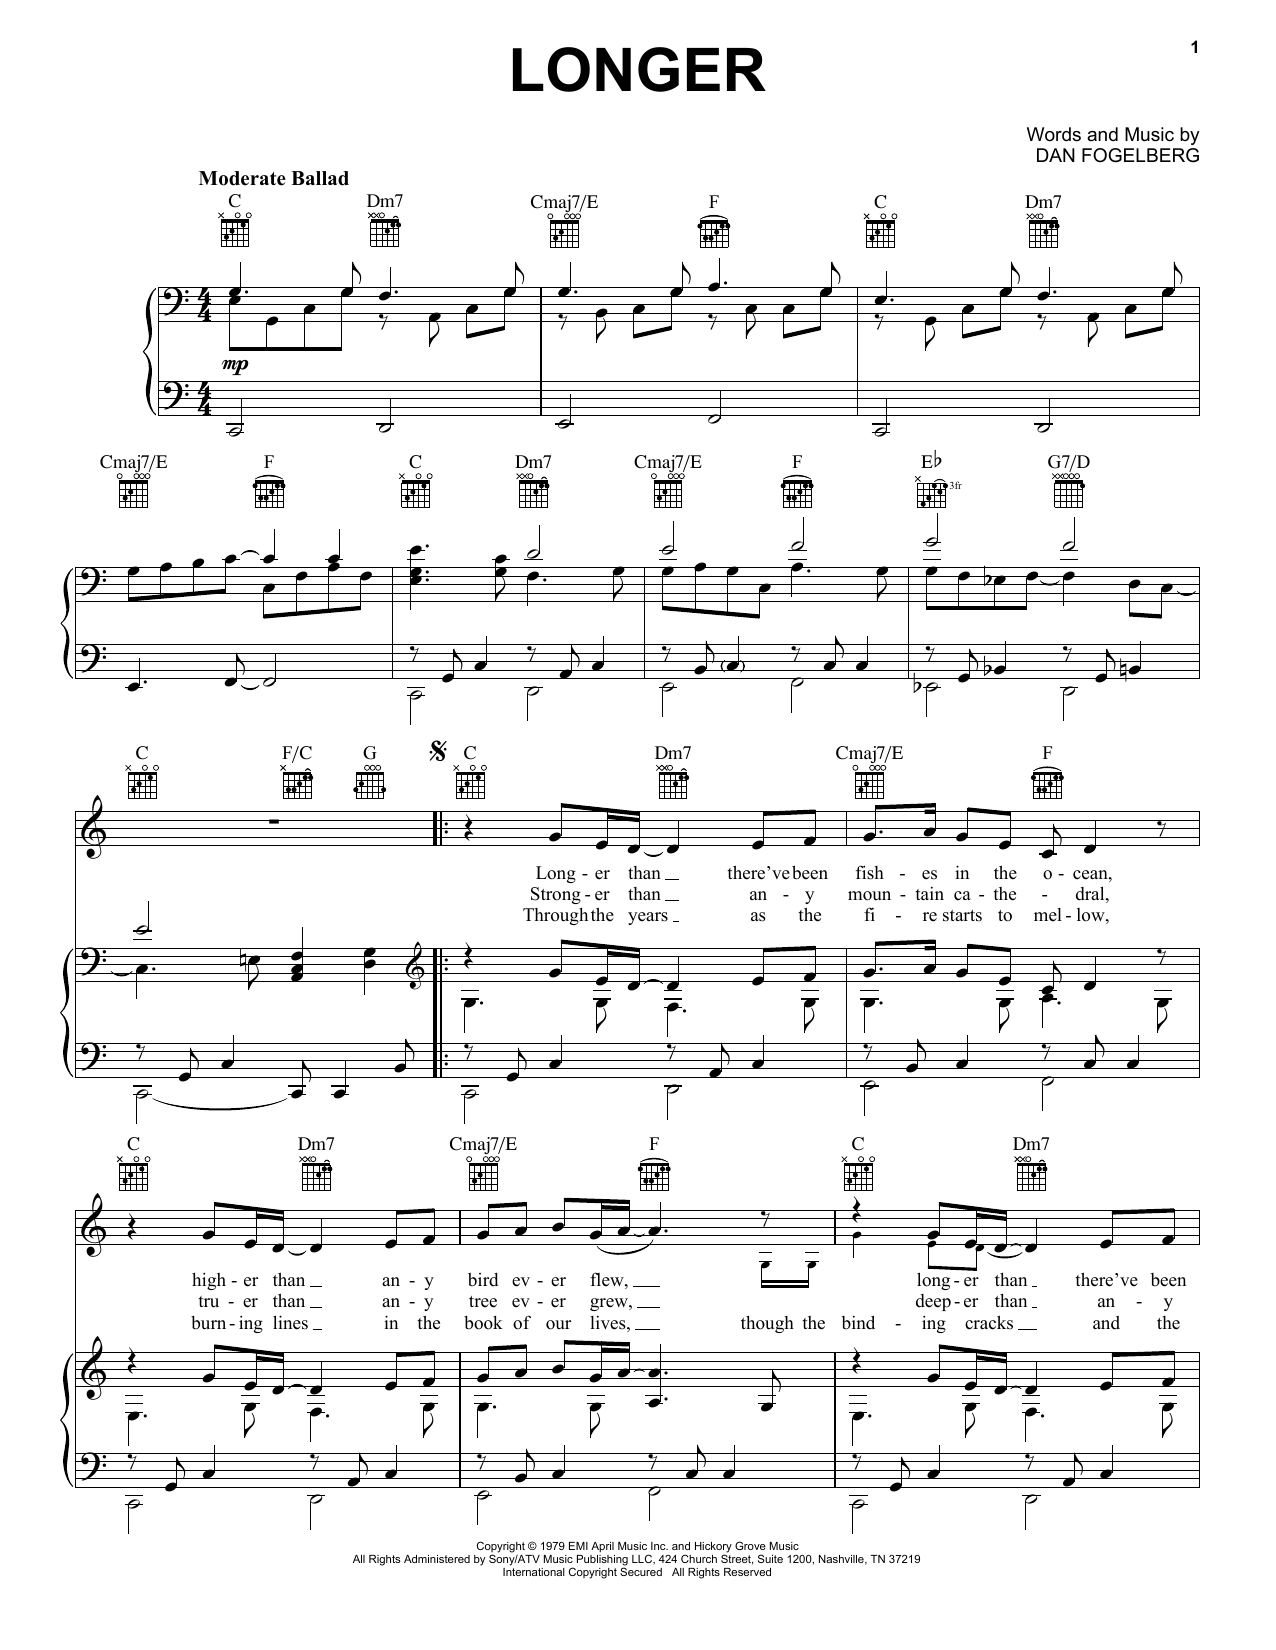 Dan Fogelberg Longer Sheet Music Notes & Chords for Easy Piano - Download or Print PDF